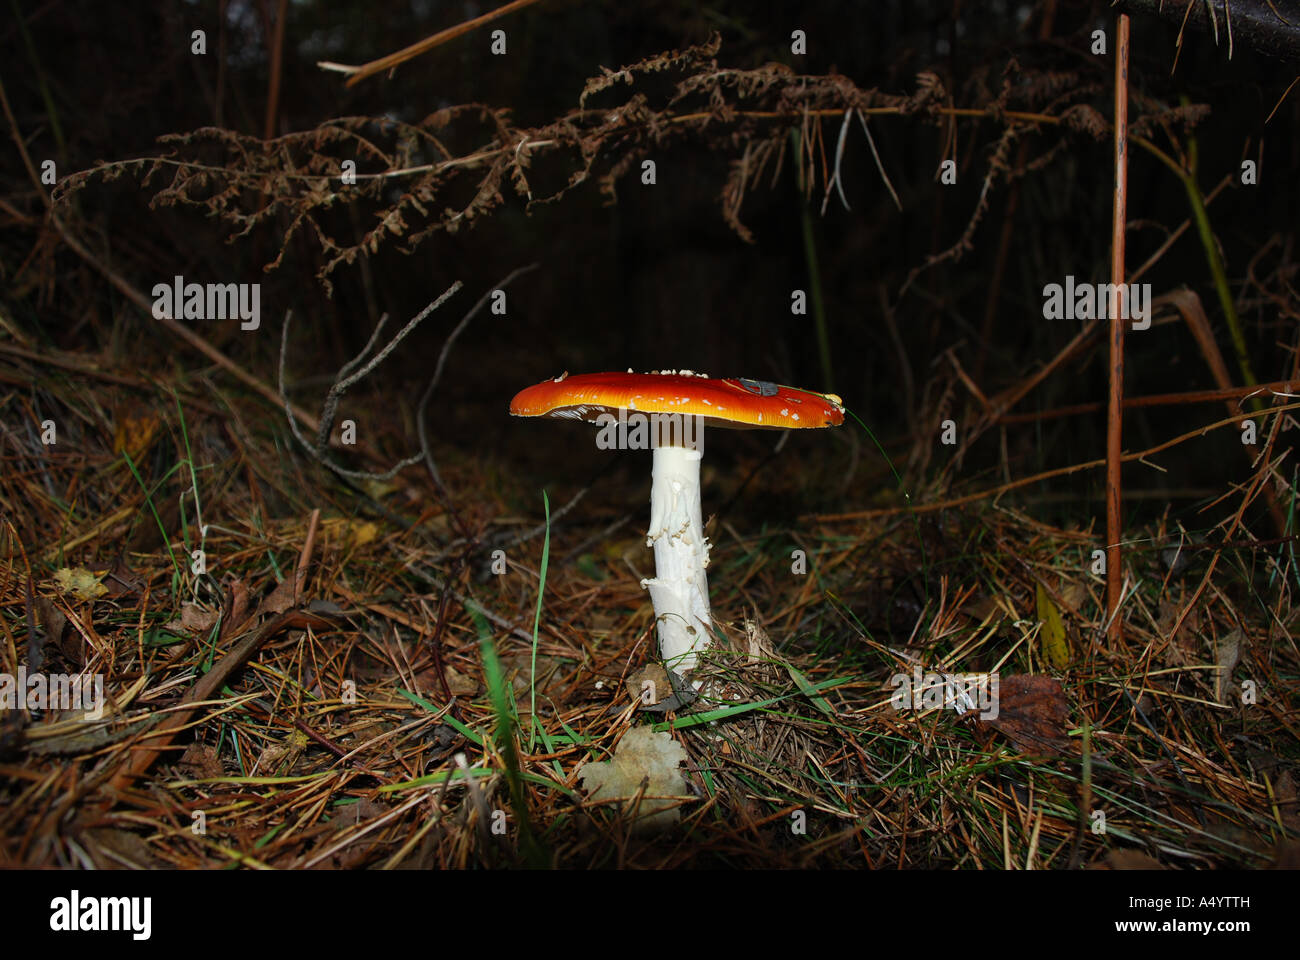 Mushroom, amongst the pine needles Stock Photo